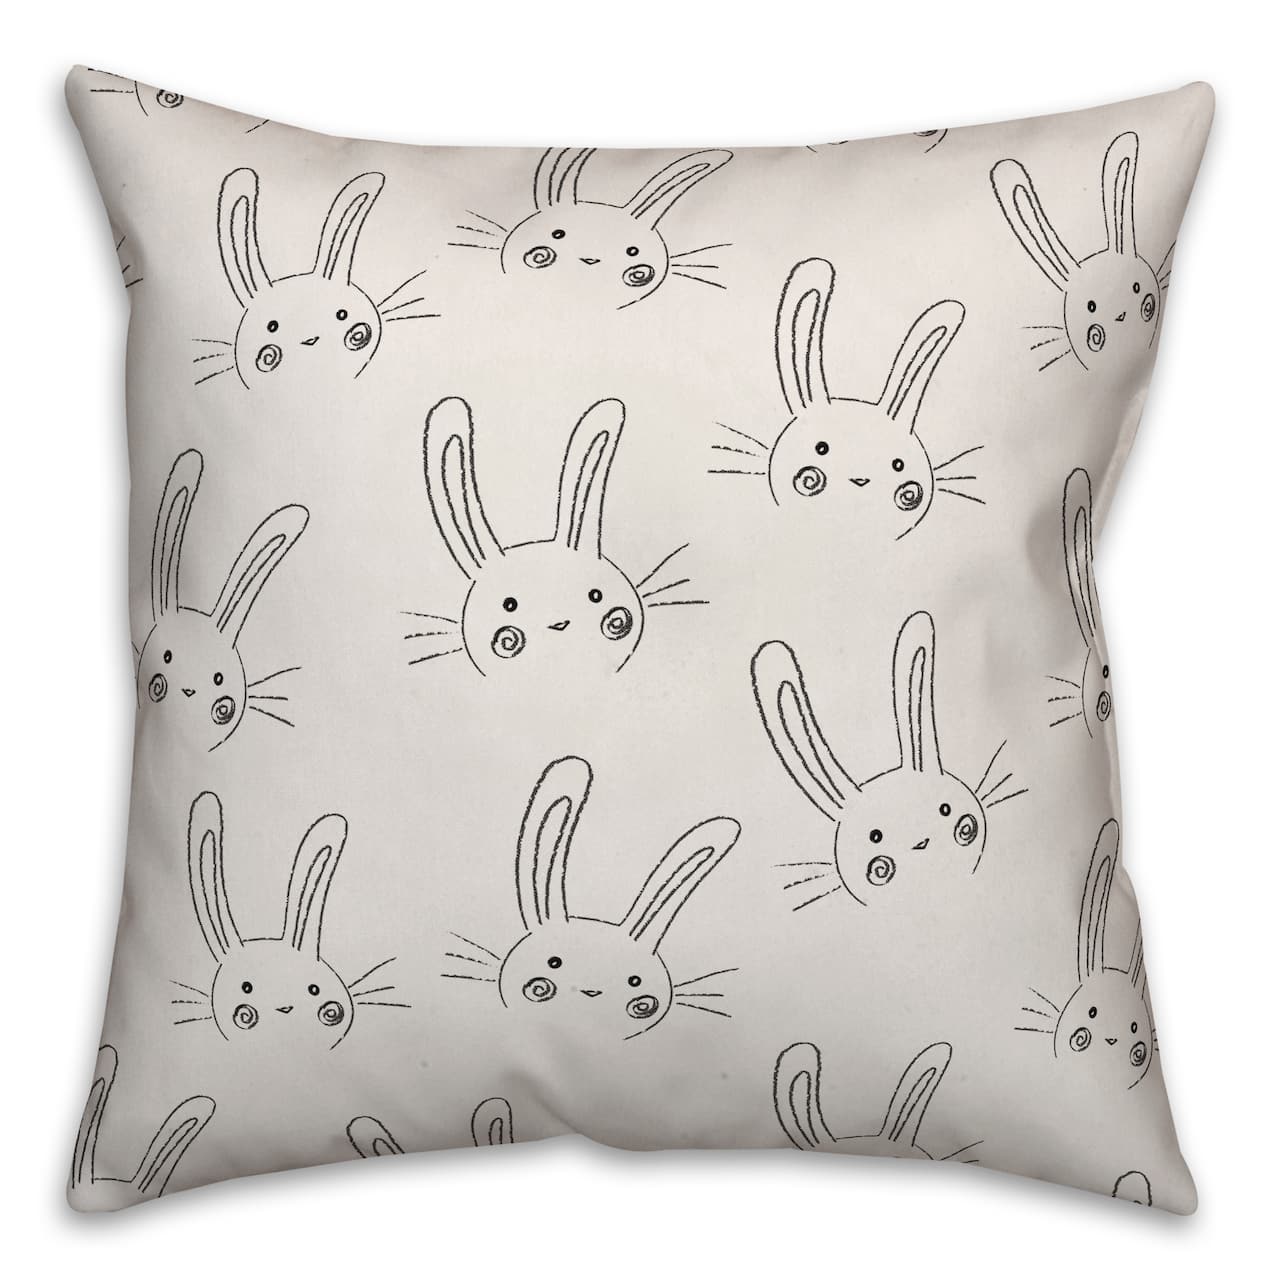 Bunny Sketch Pattern Throw Pillow